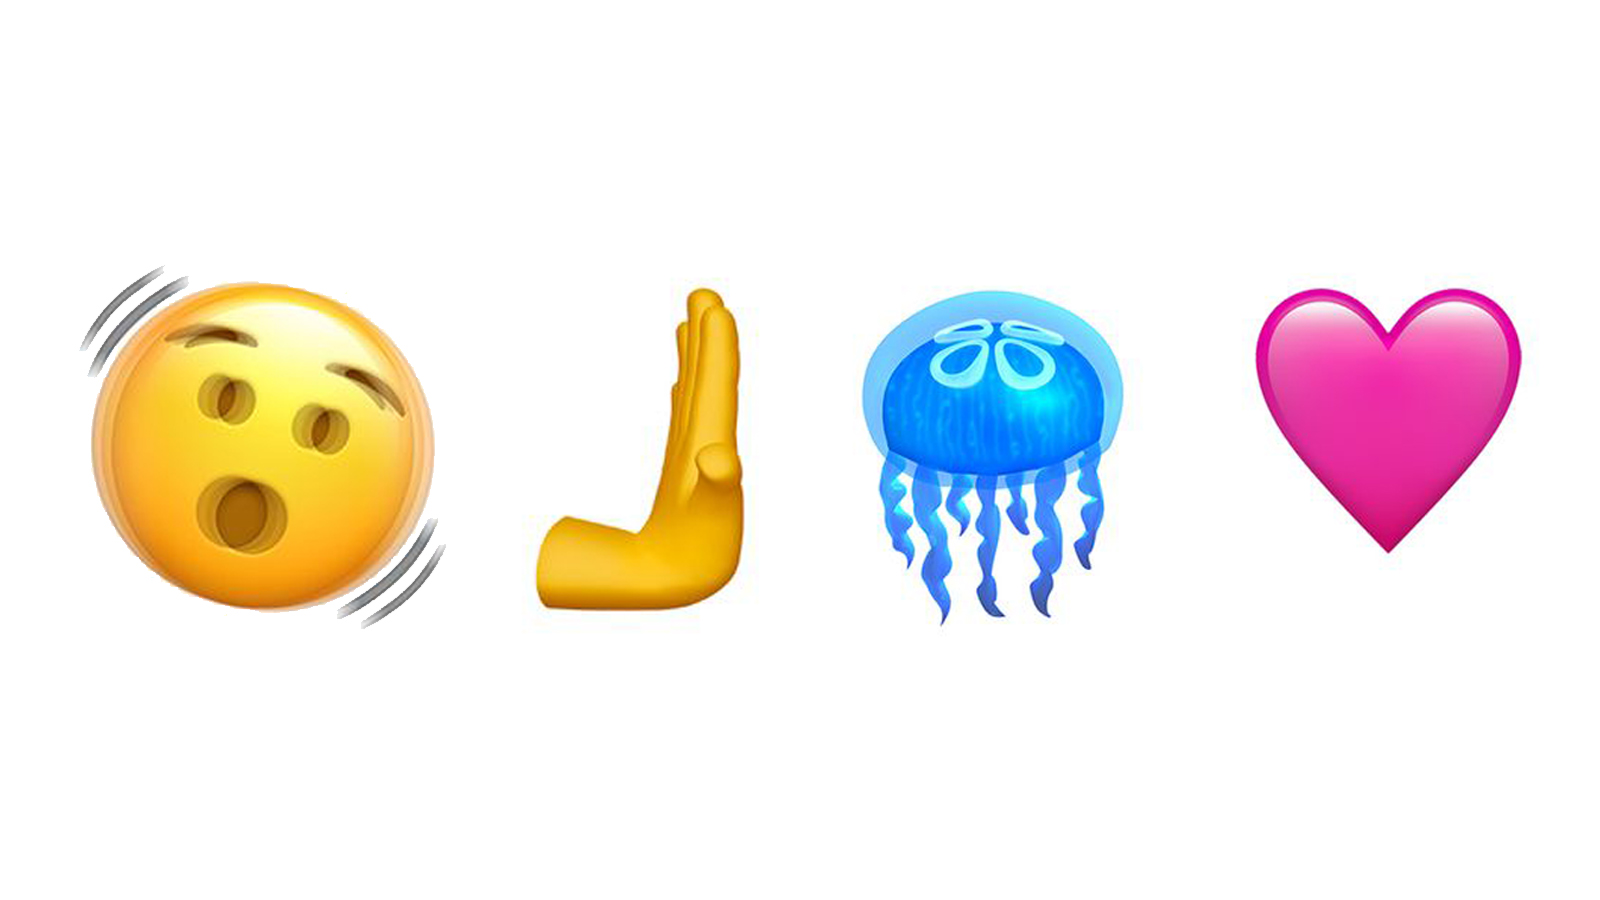 Four emojis from iOS 16.4